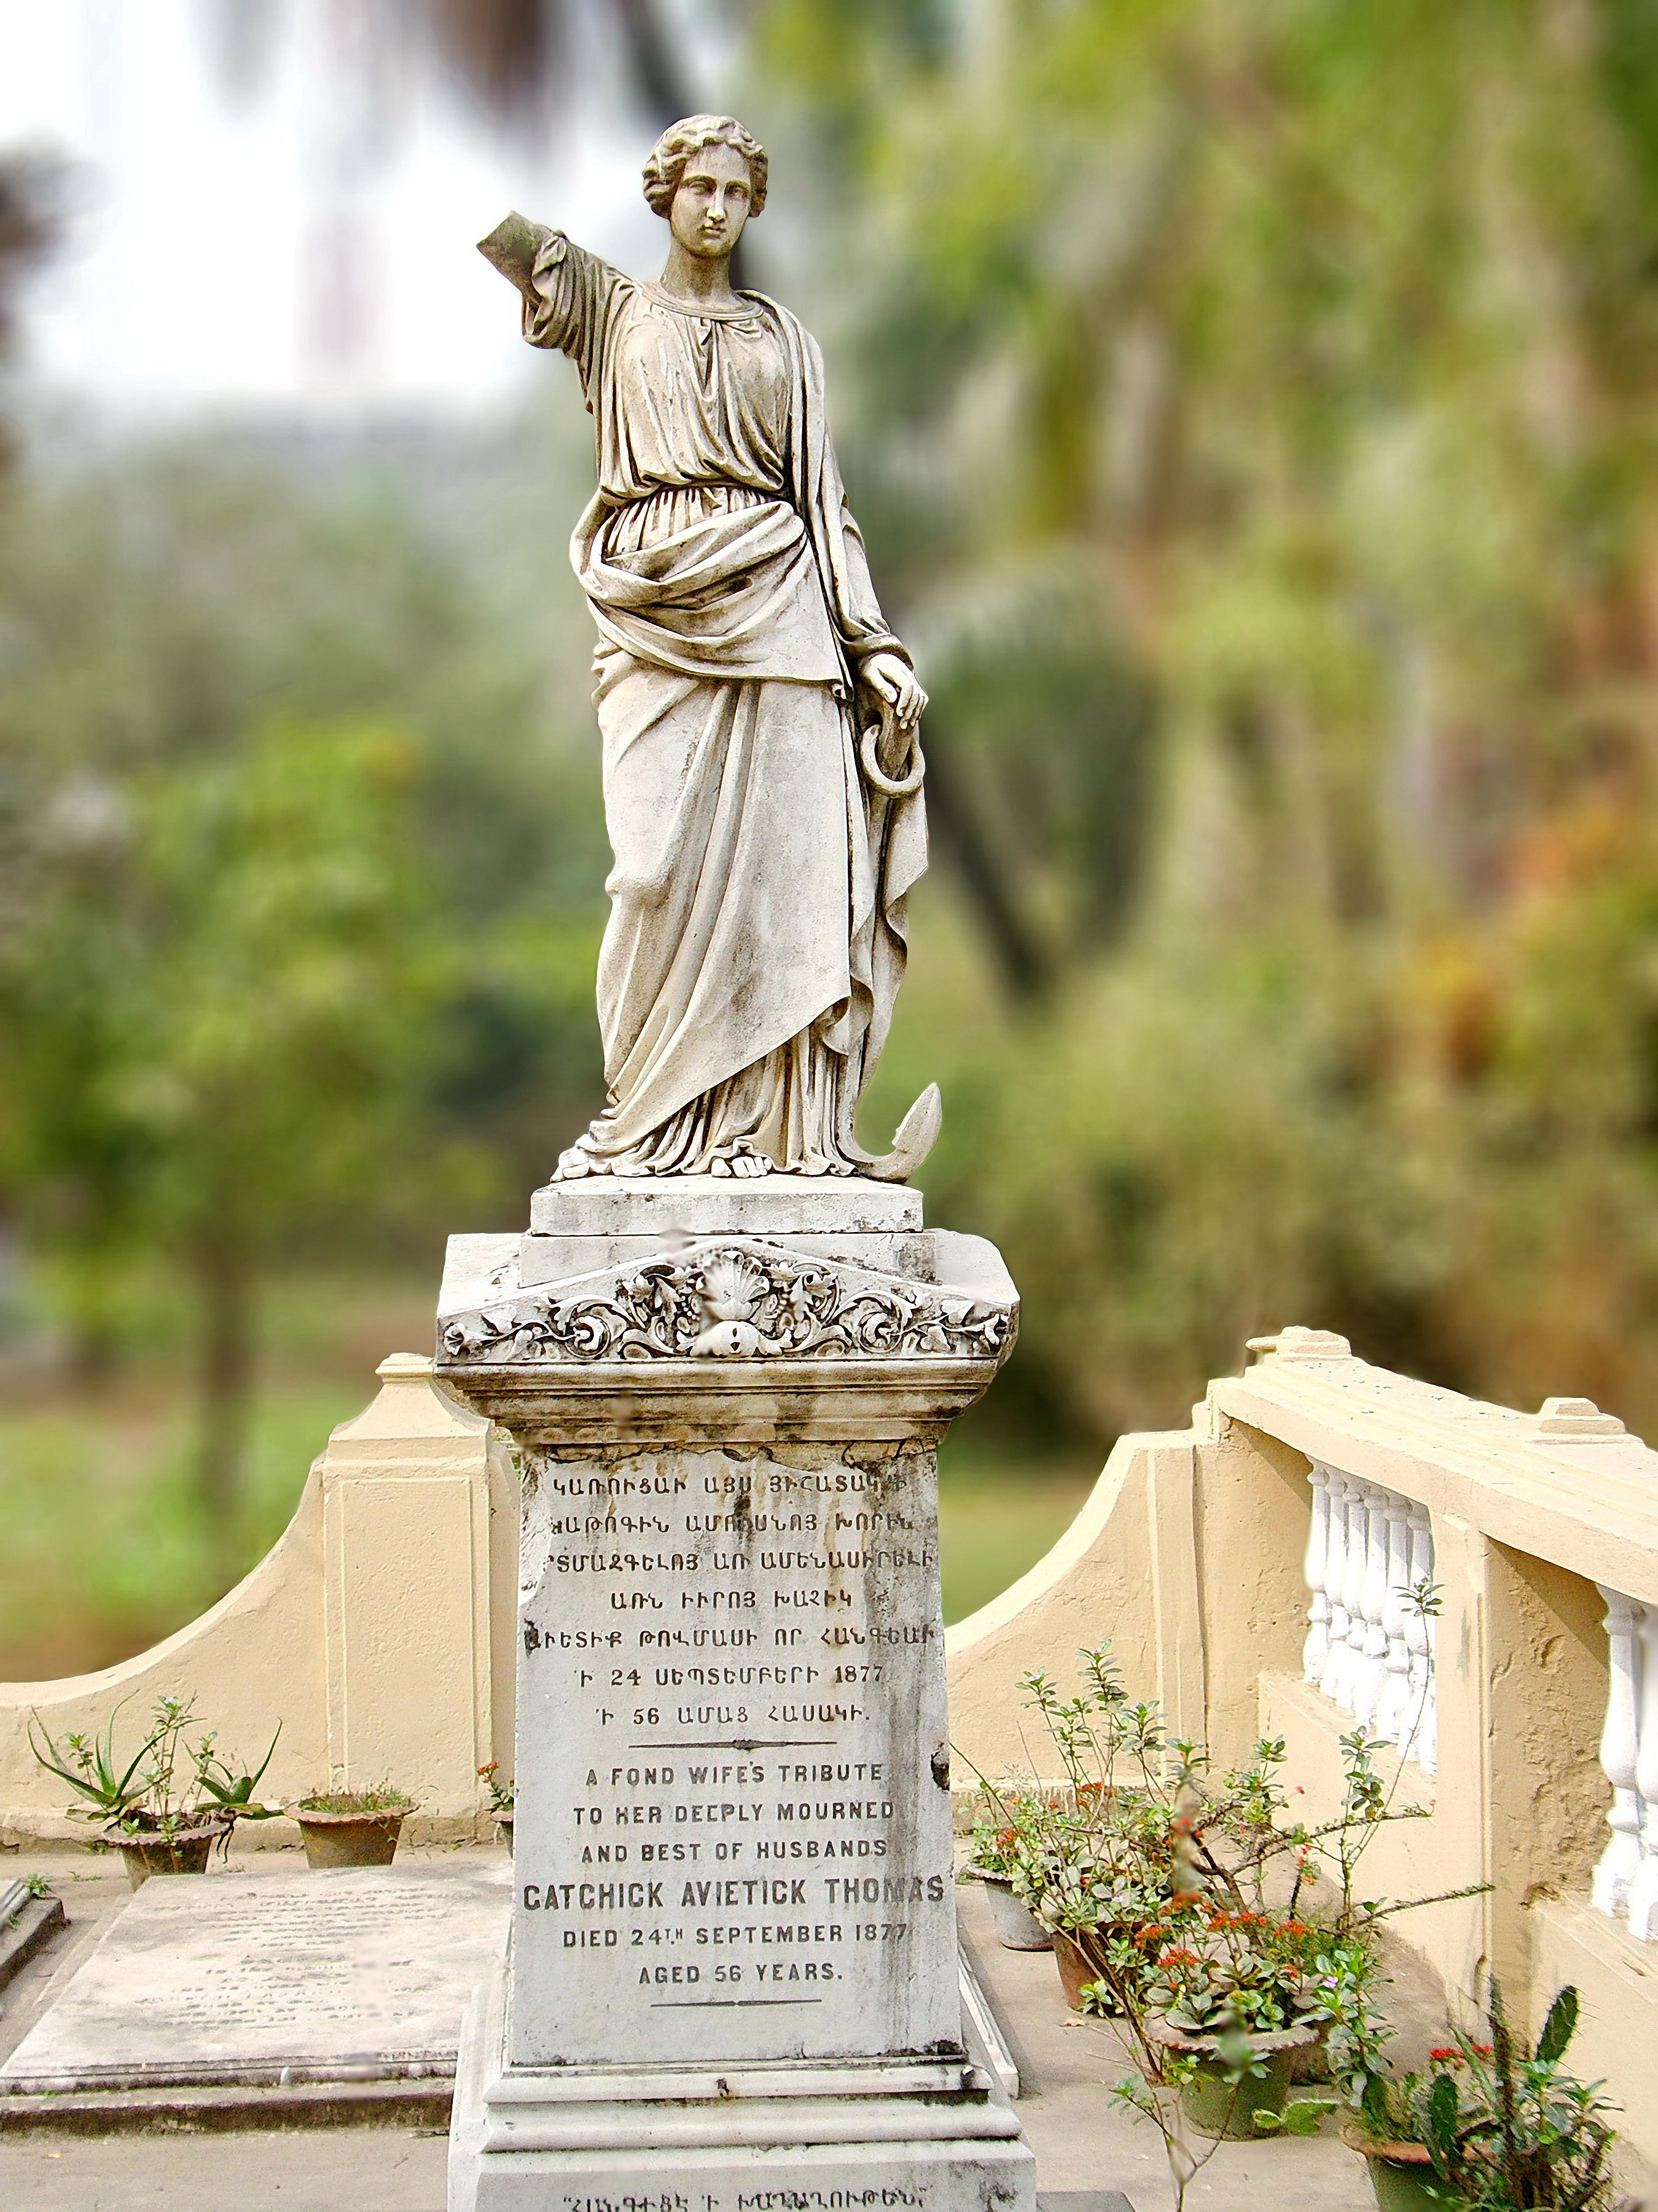 Statue located inside the Armenian Church in Dhaka